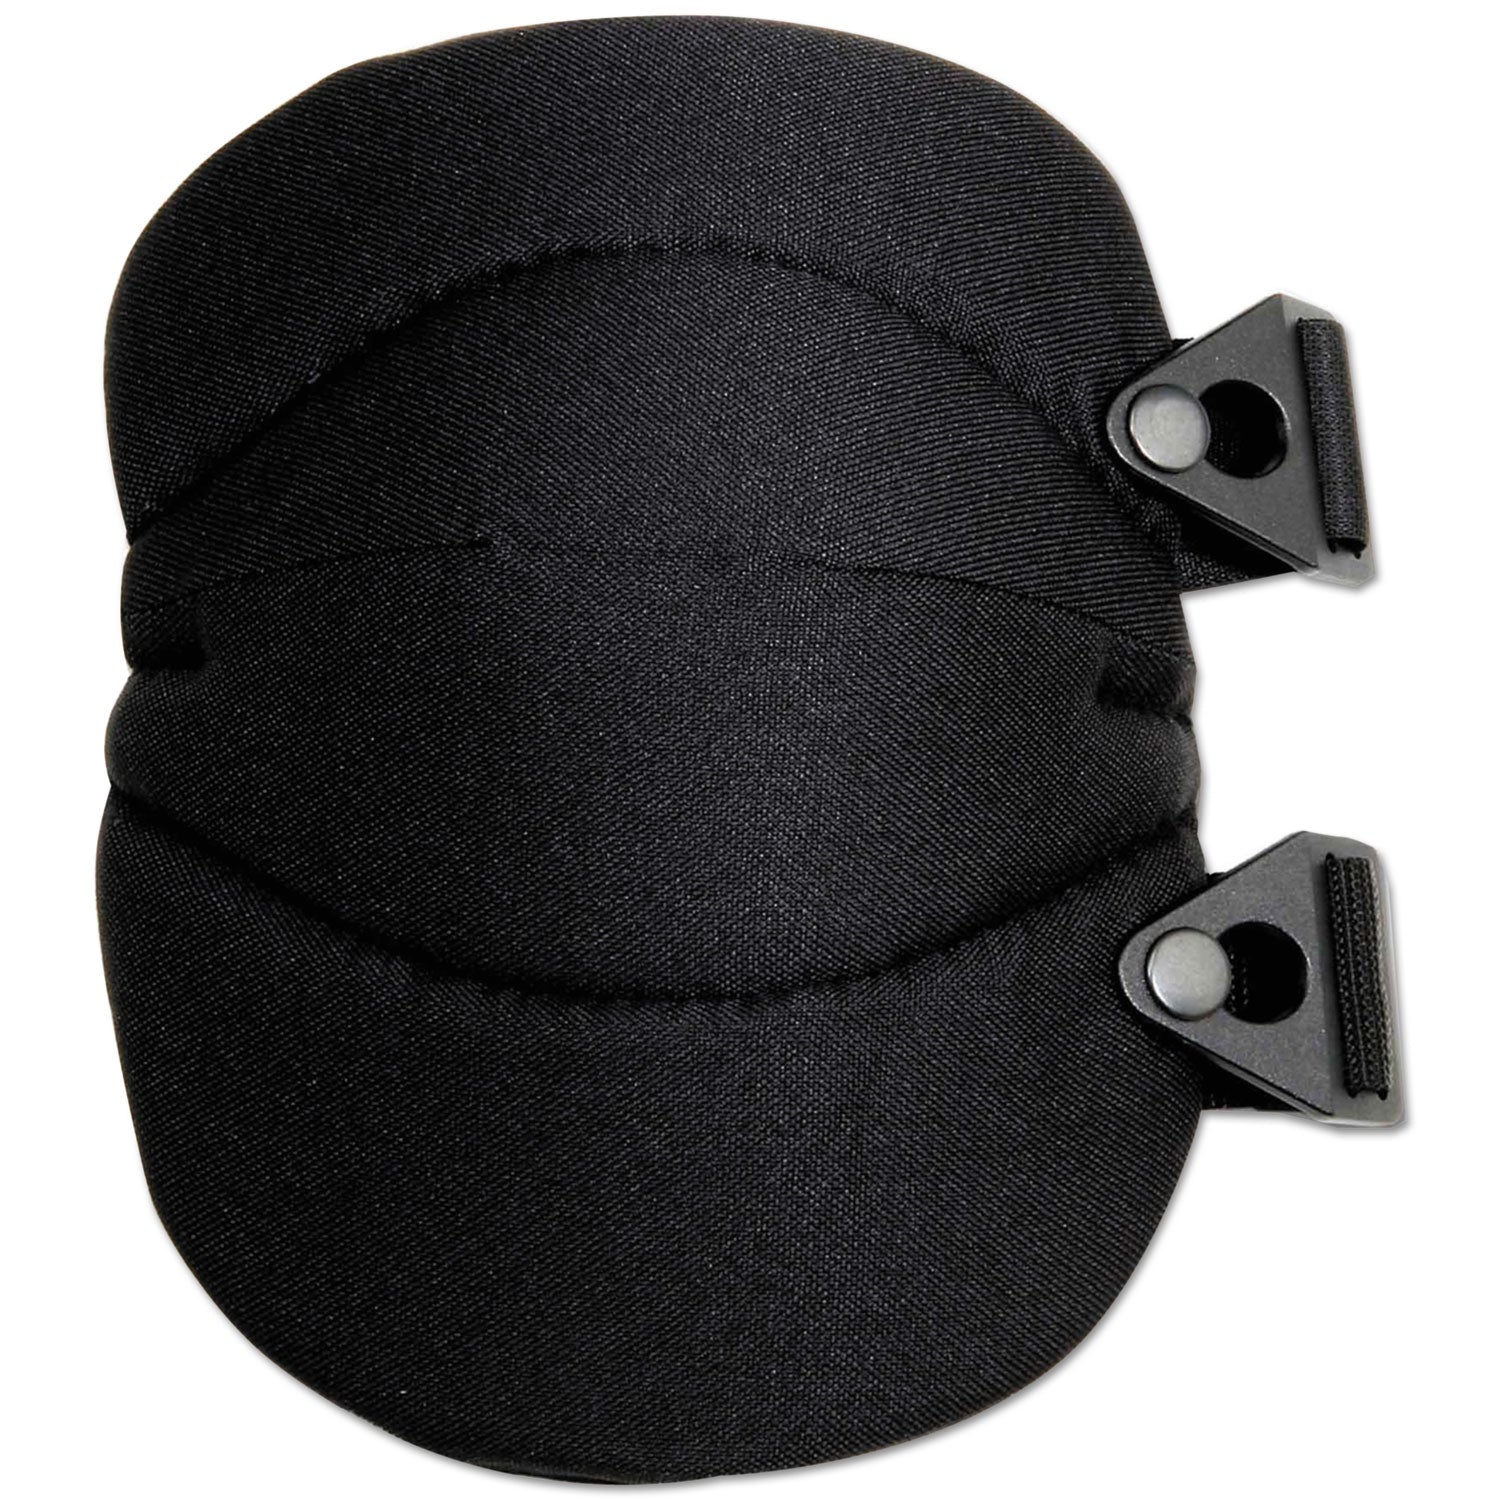 ProFlex 230 Wide Soft Cap Knee Pad, Buckle Closure, One Size Fits Most, Black - 